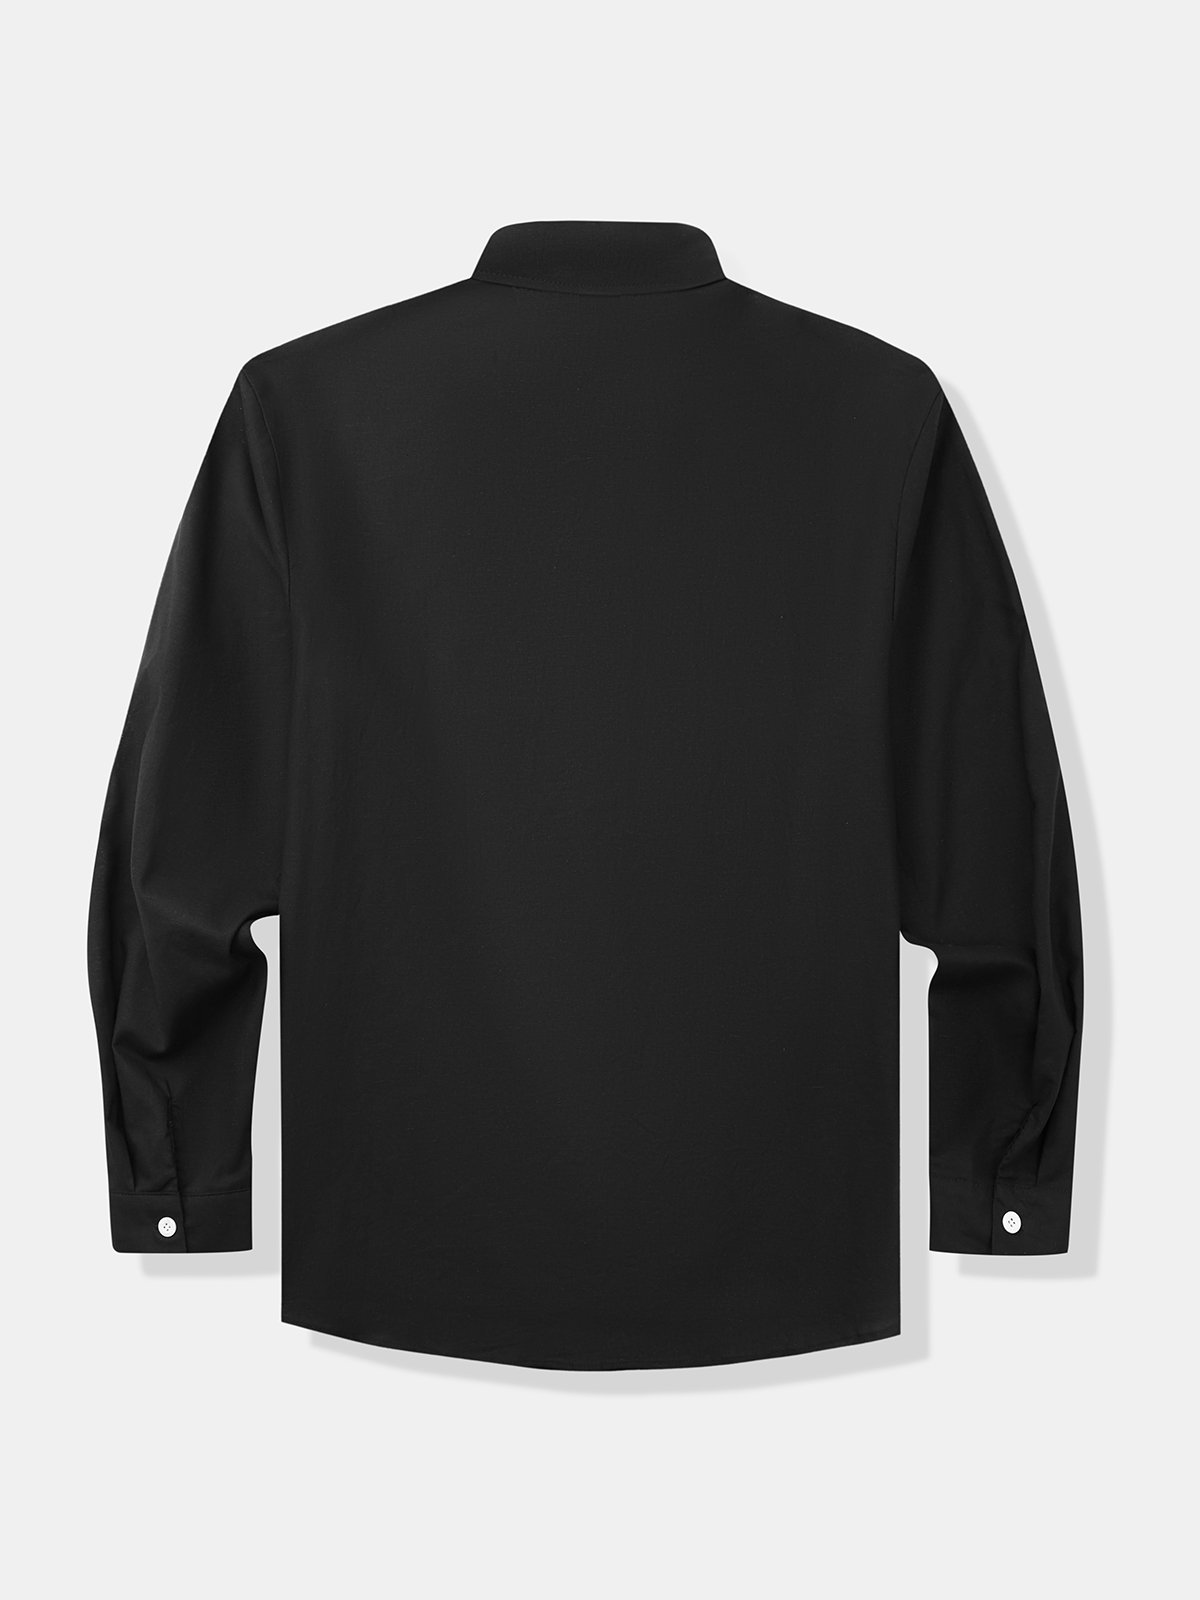 Hardaddy Cotton Sailfish Print Long Sleeve Casual Shirt